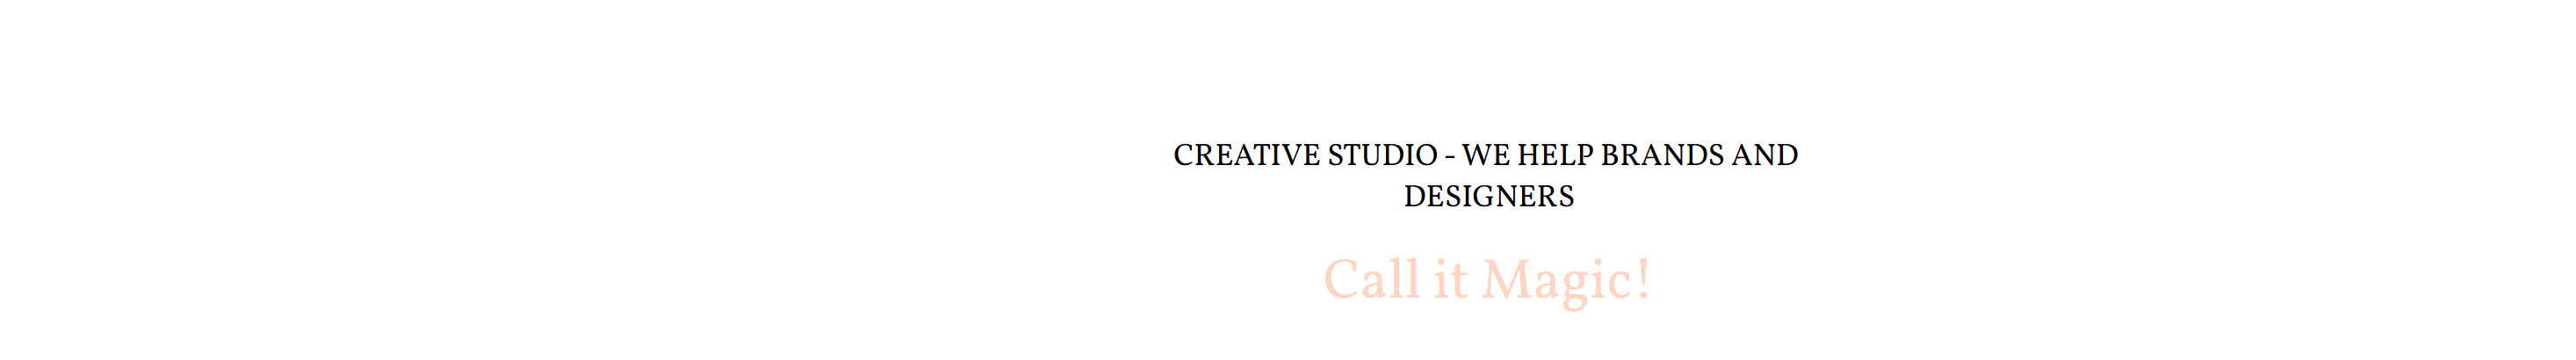 Epilog Creative Studio's profile banner